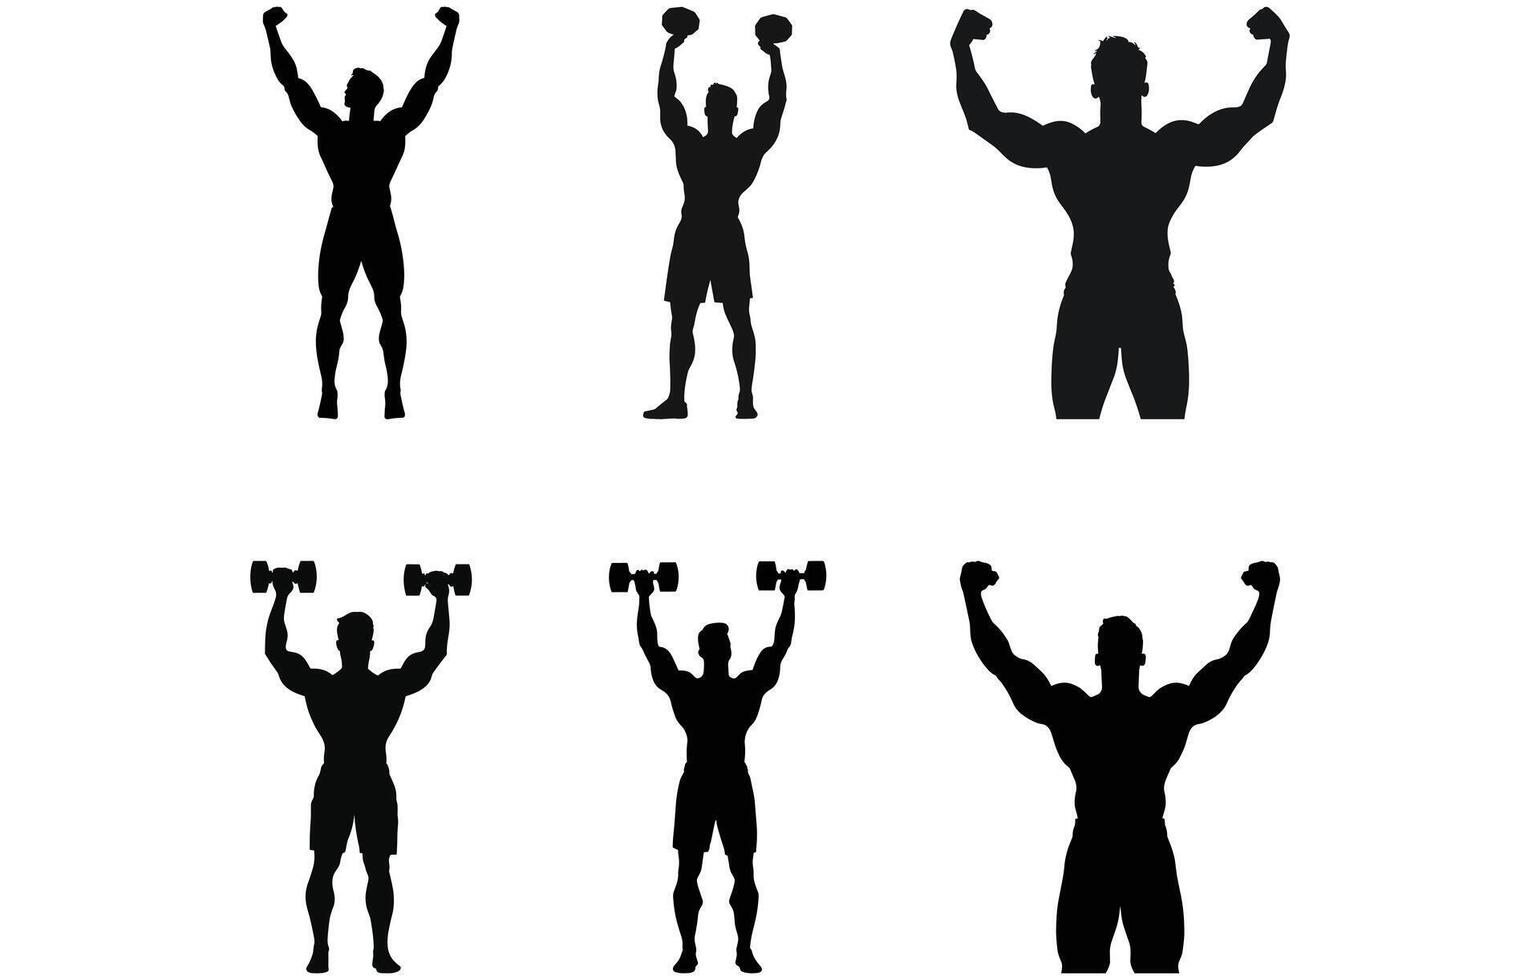 bodybuilder strongmen doing exercise with dumbbells vector, Body builder doing exercise with a dumbbell silhouette vector